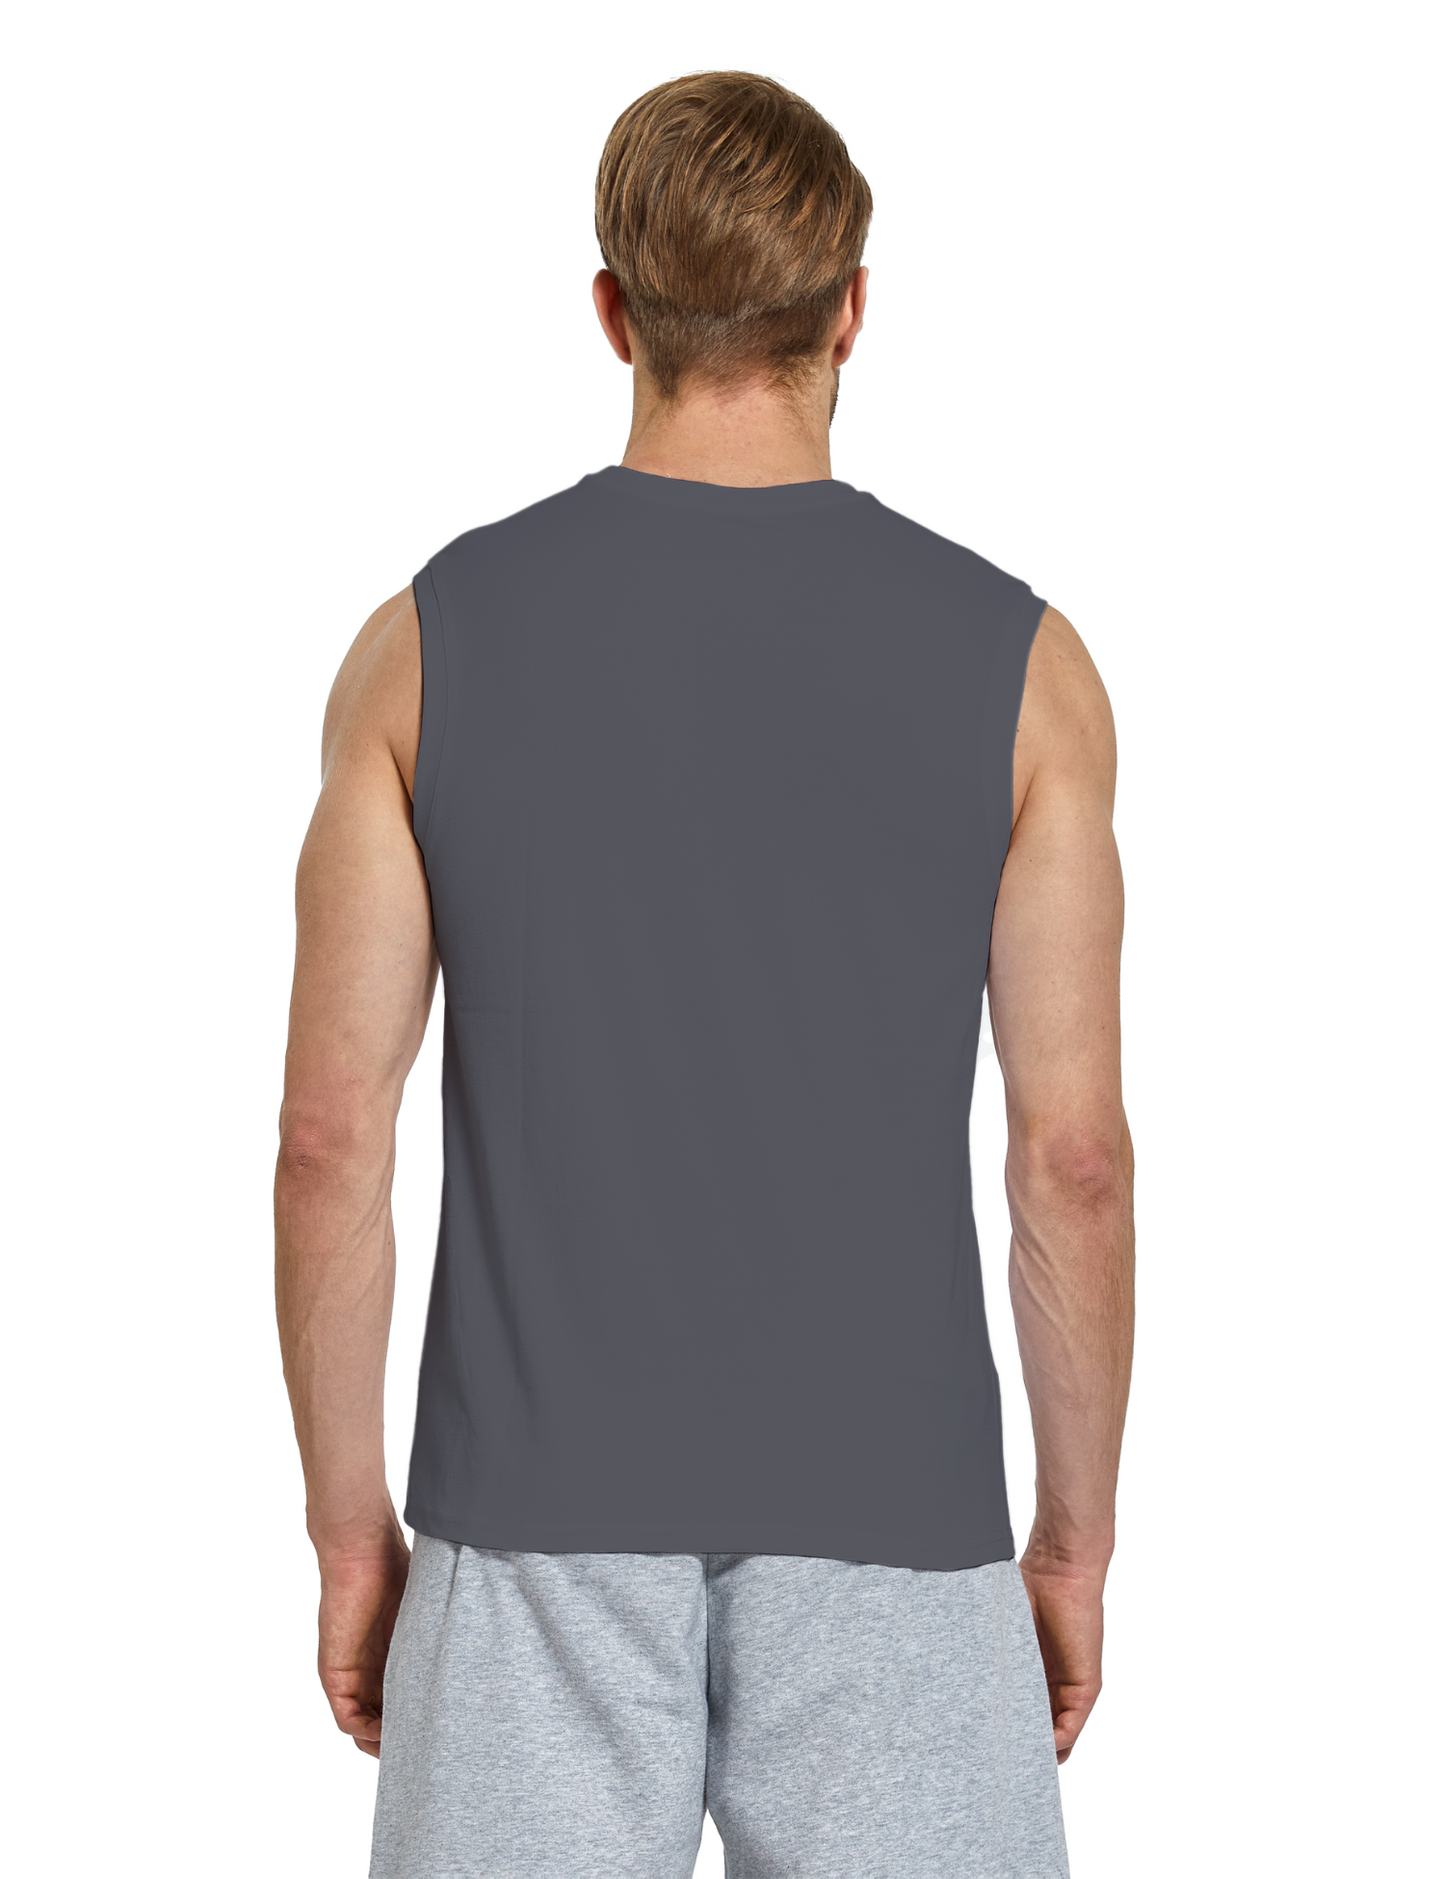 mens sleeveless shirts dark grey